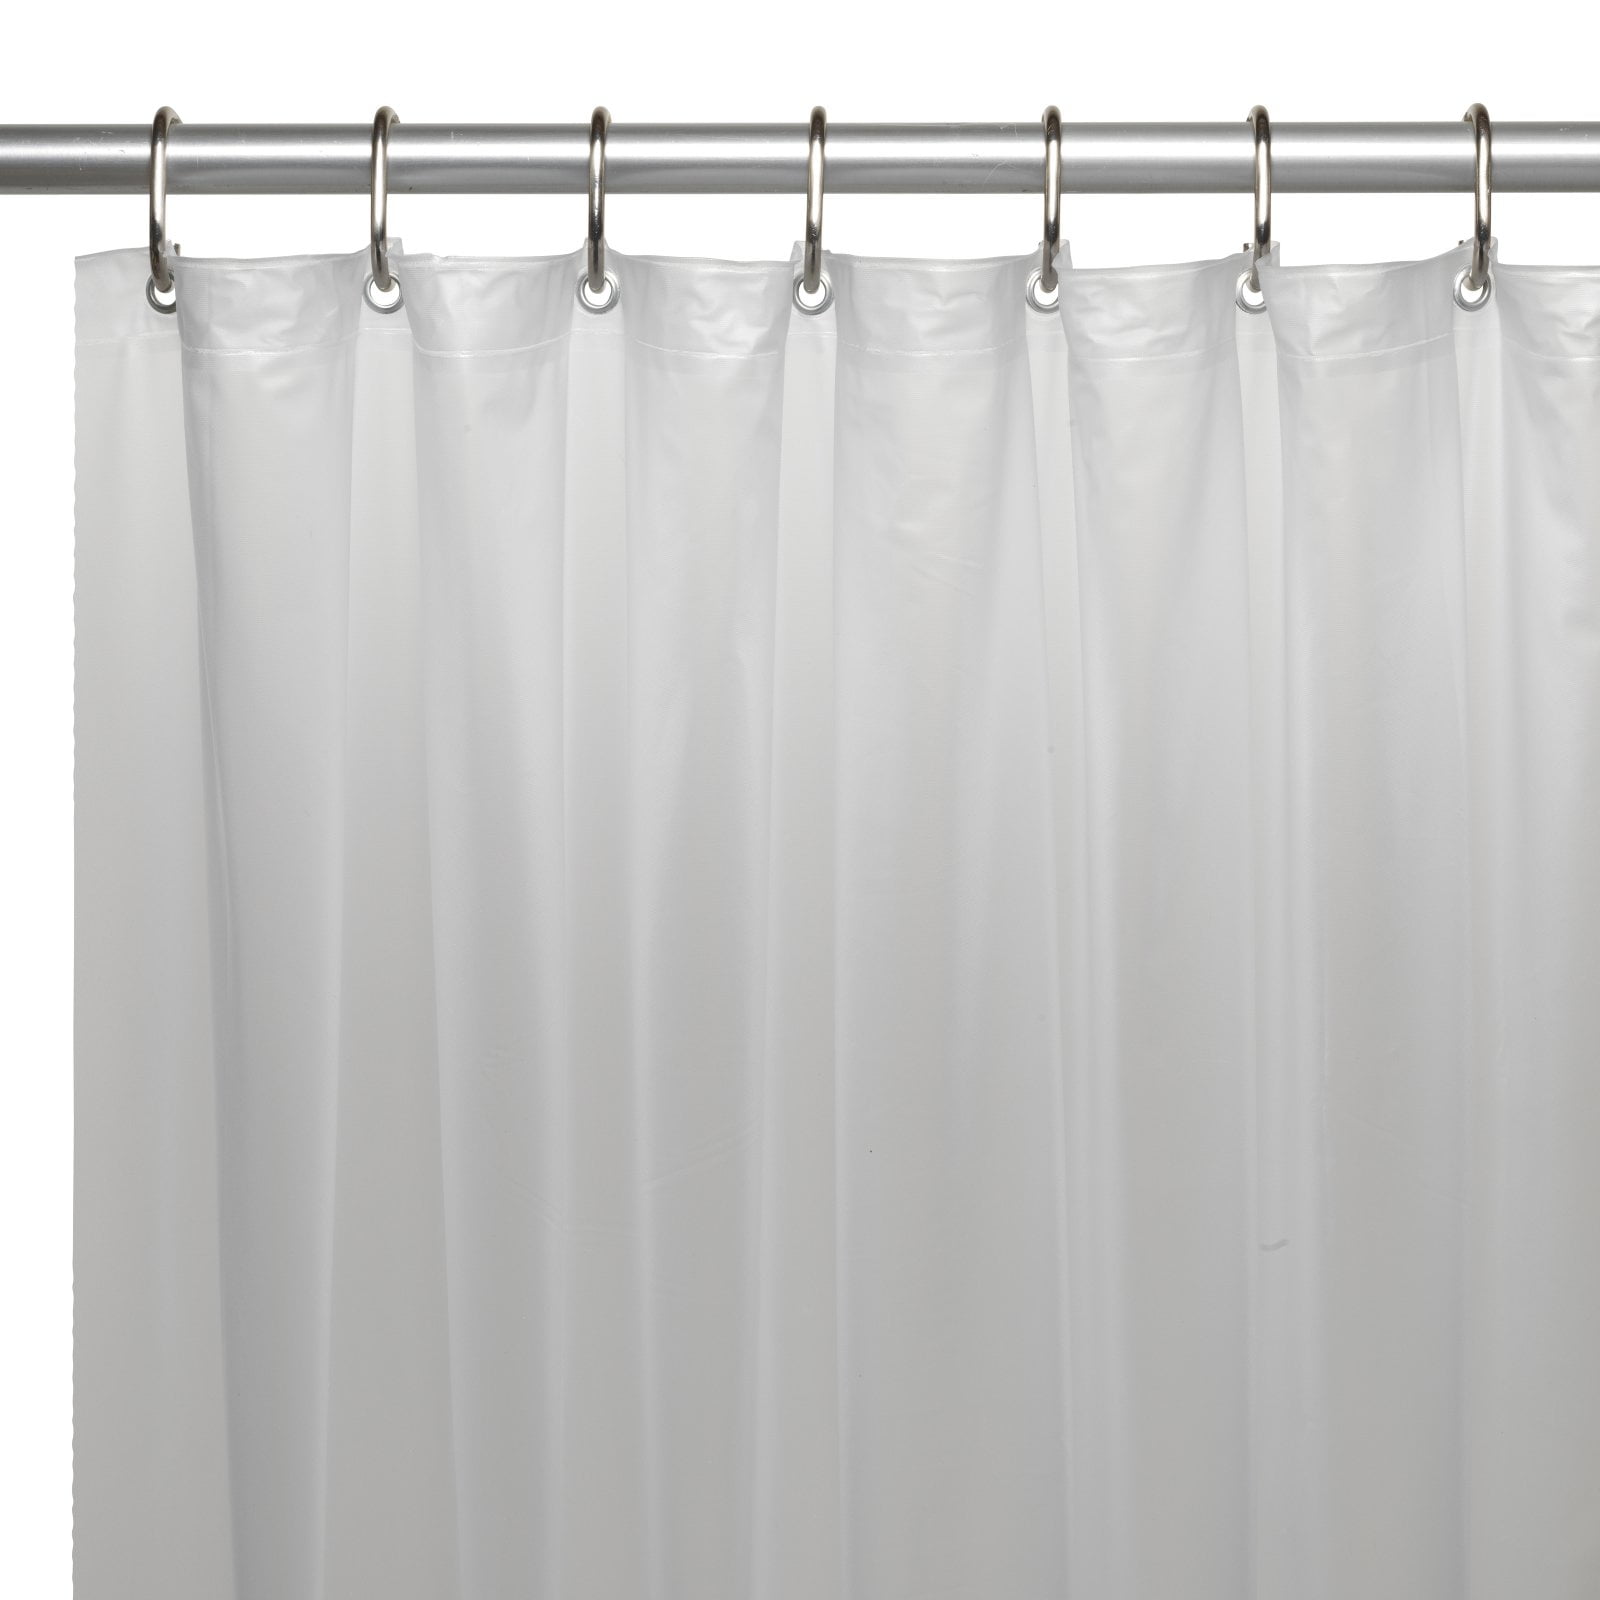 10 Gauge Vinyl Shower Curtain Liner, 20 Gauge Shower Curtain